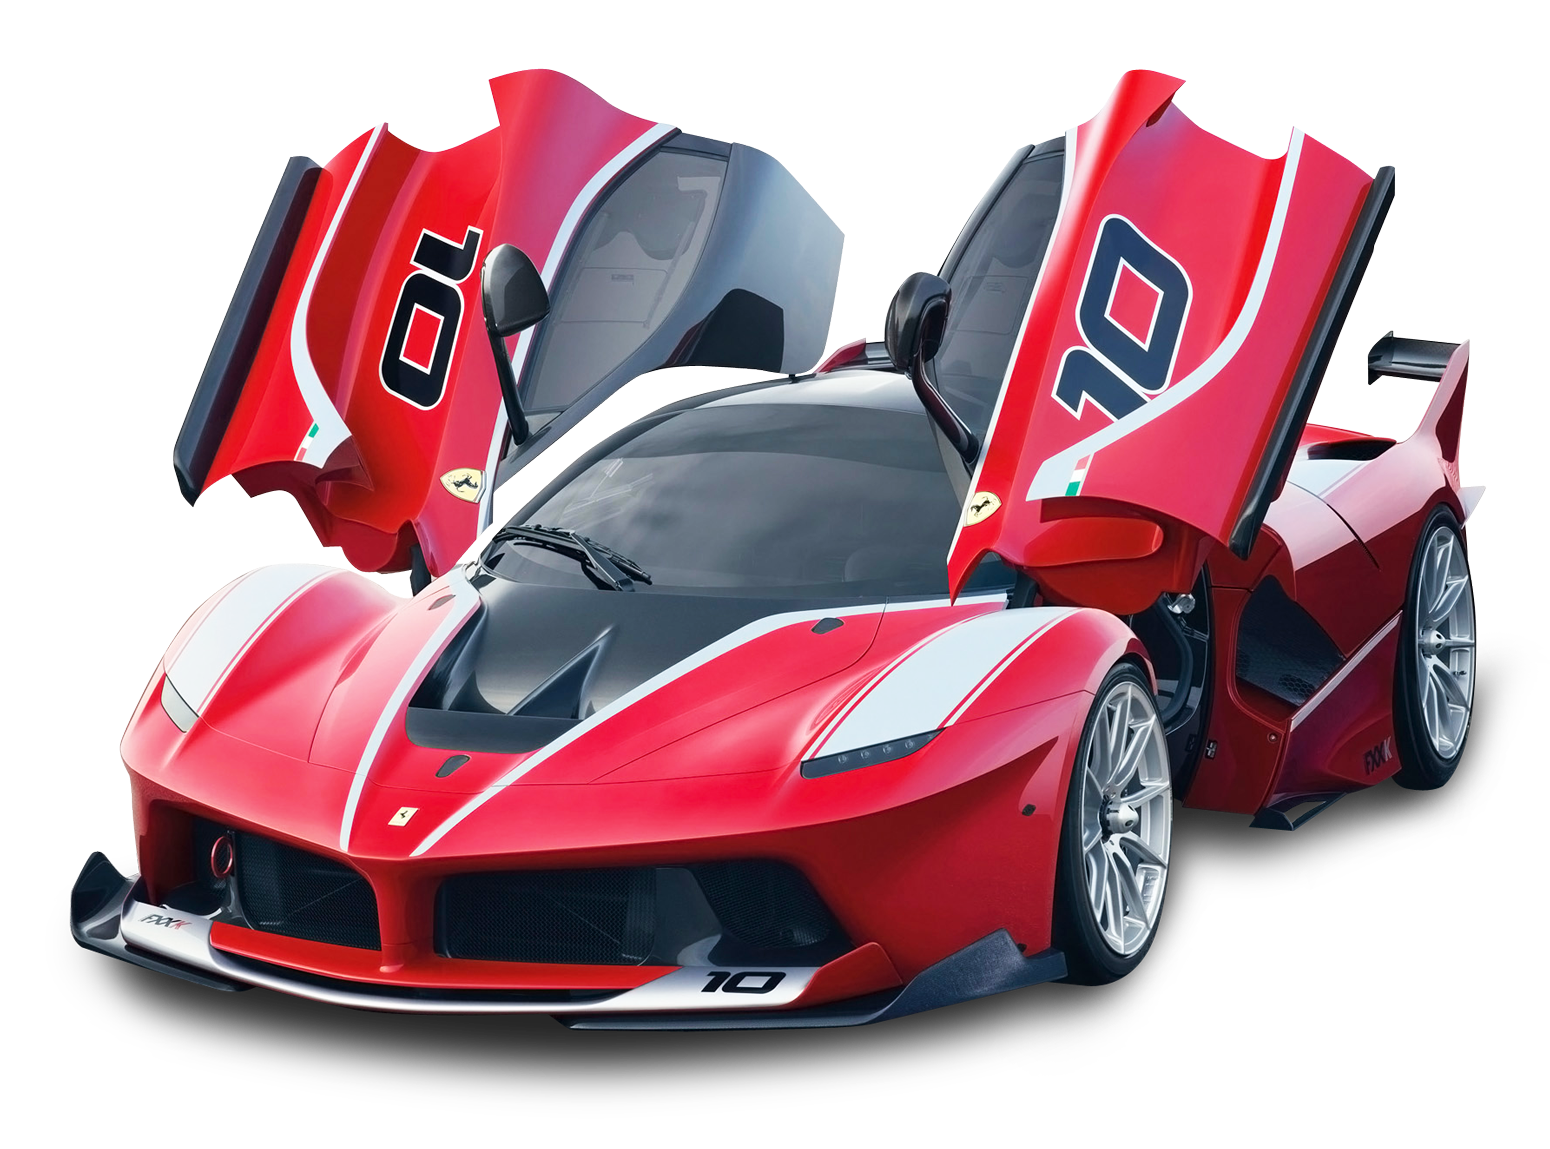 Red Ferrari FXX K Car PNG Image